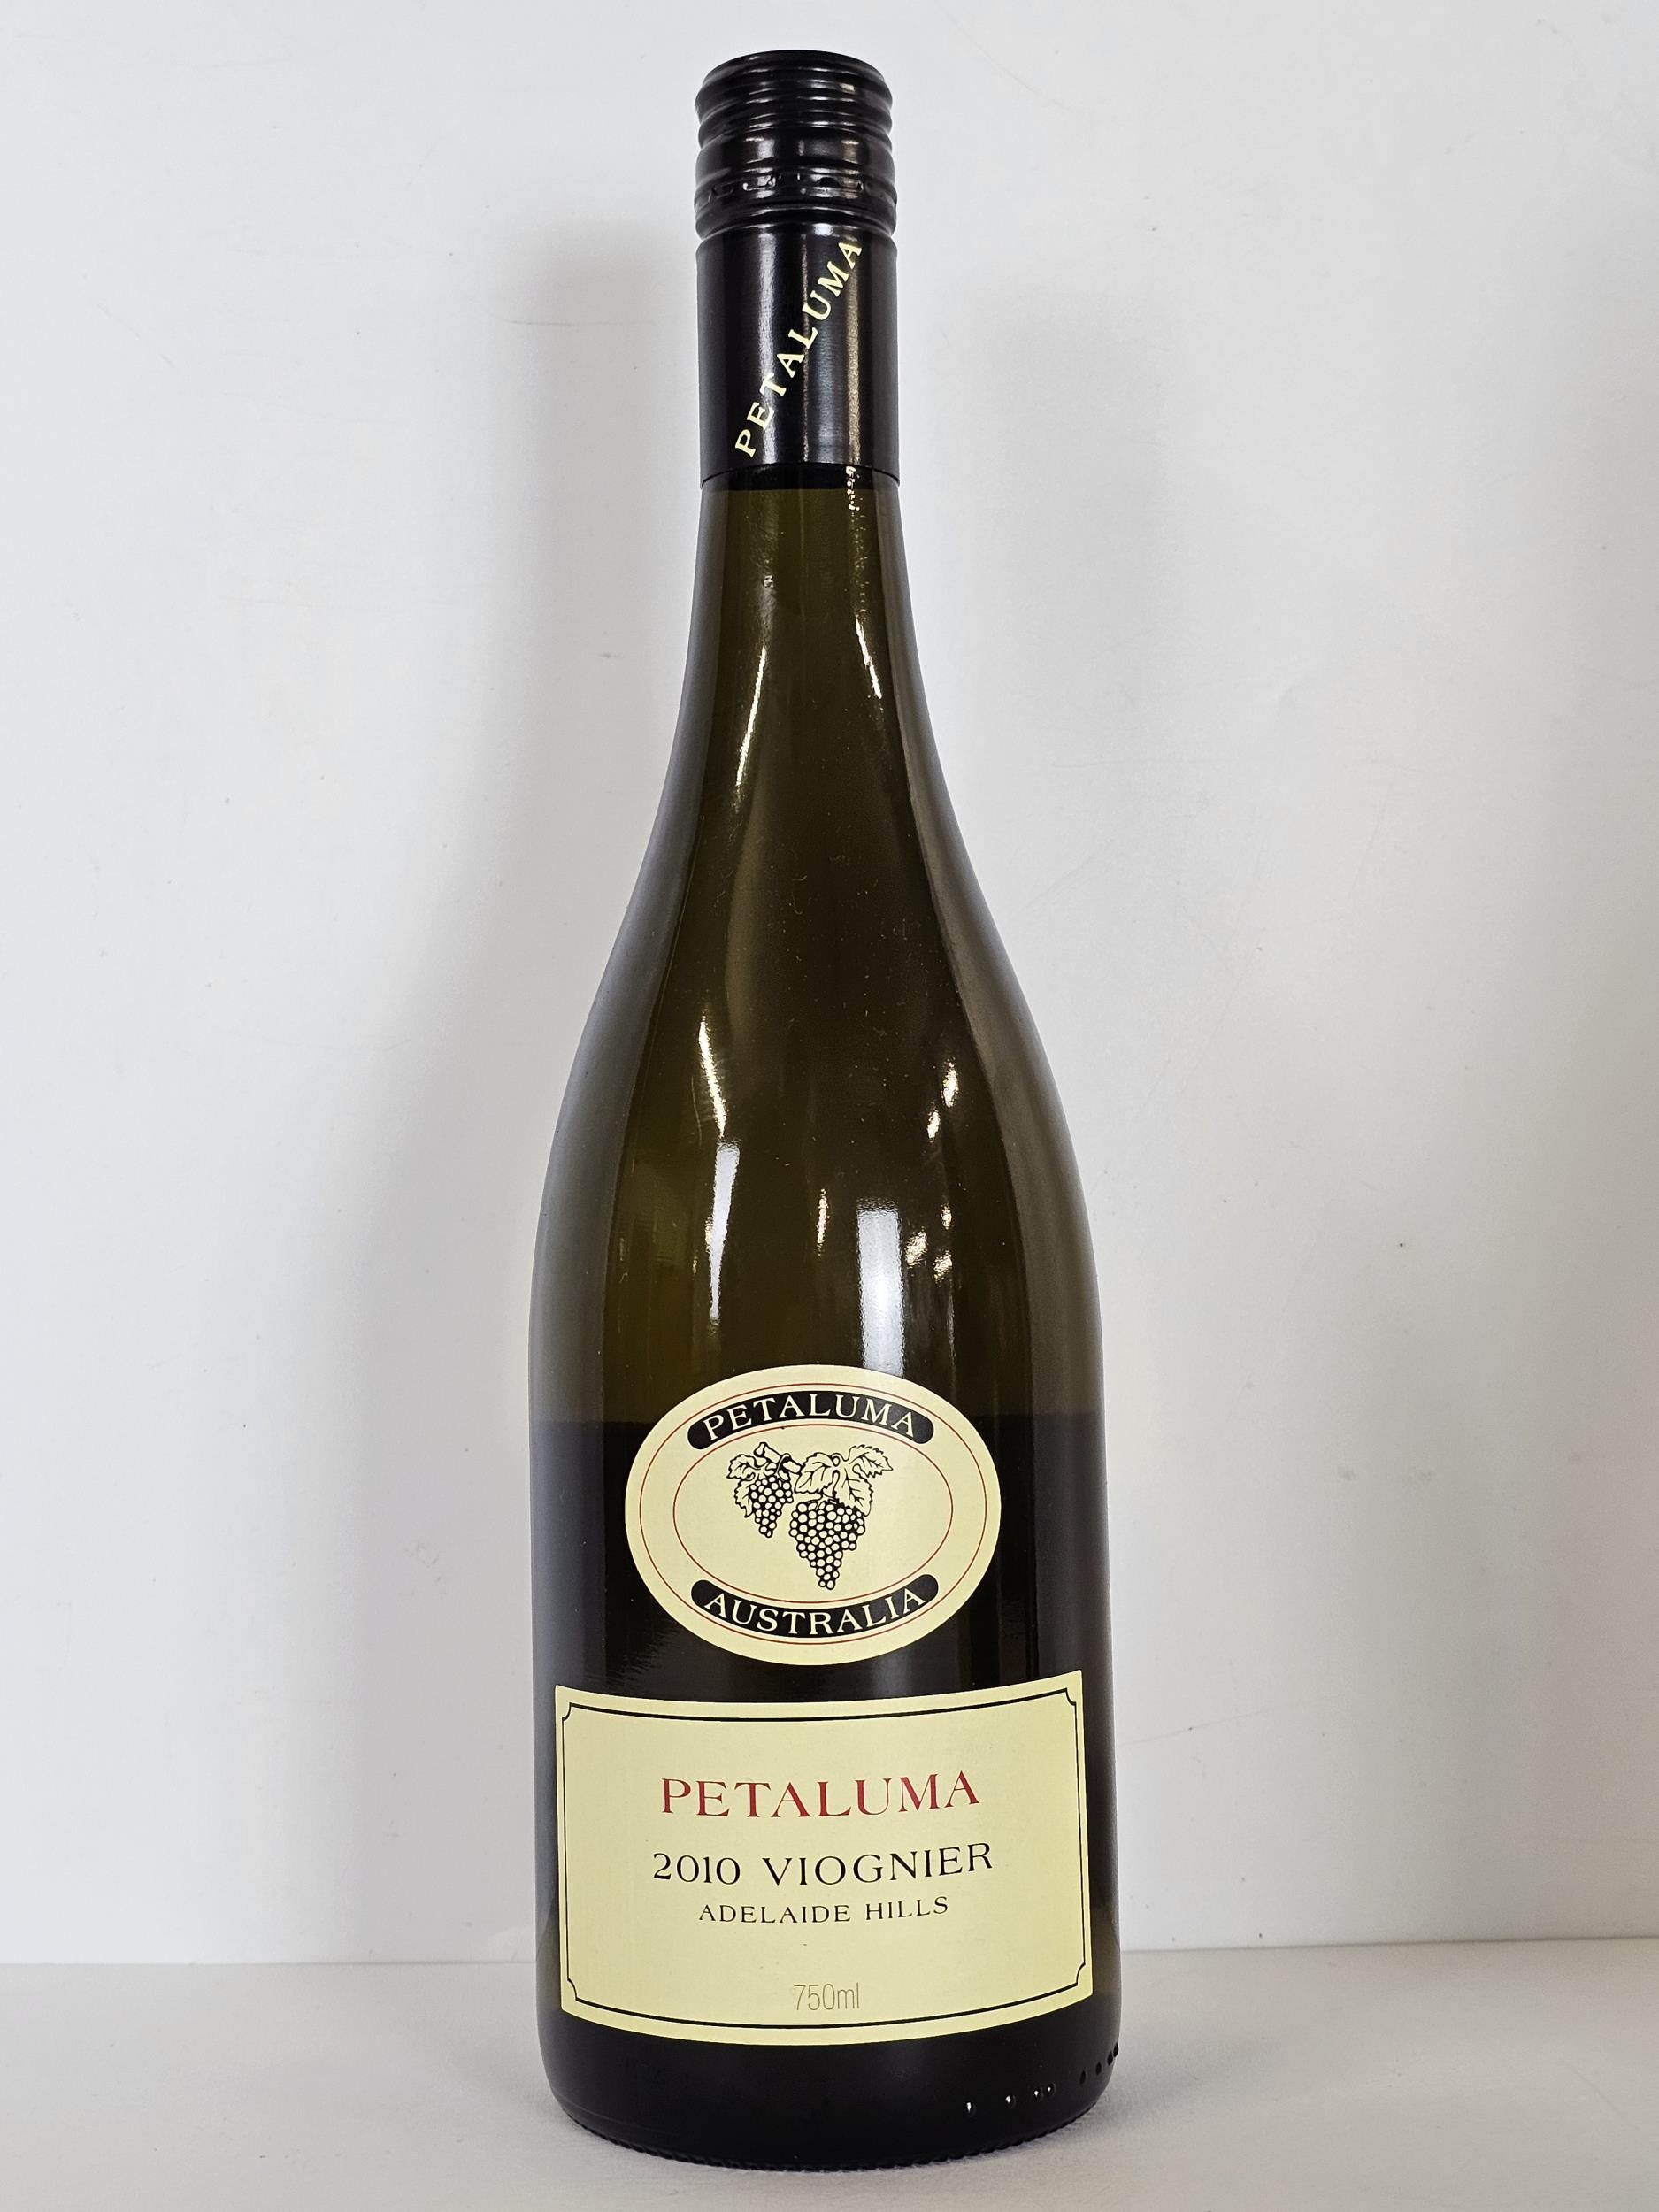 2010 Petaluma Viognier, Adelaide Hills, Australia and two bottles of 2010 Petaluma Shiraz, - Image 2 of 3